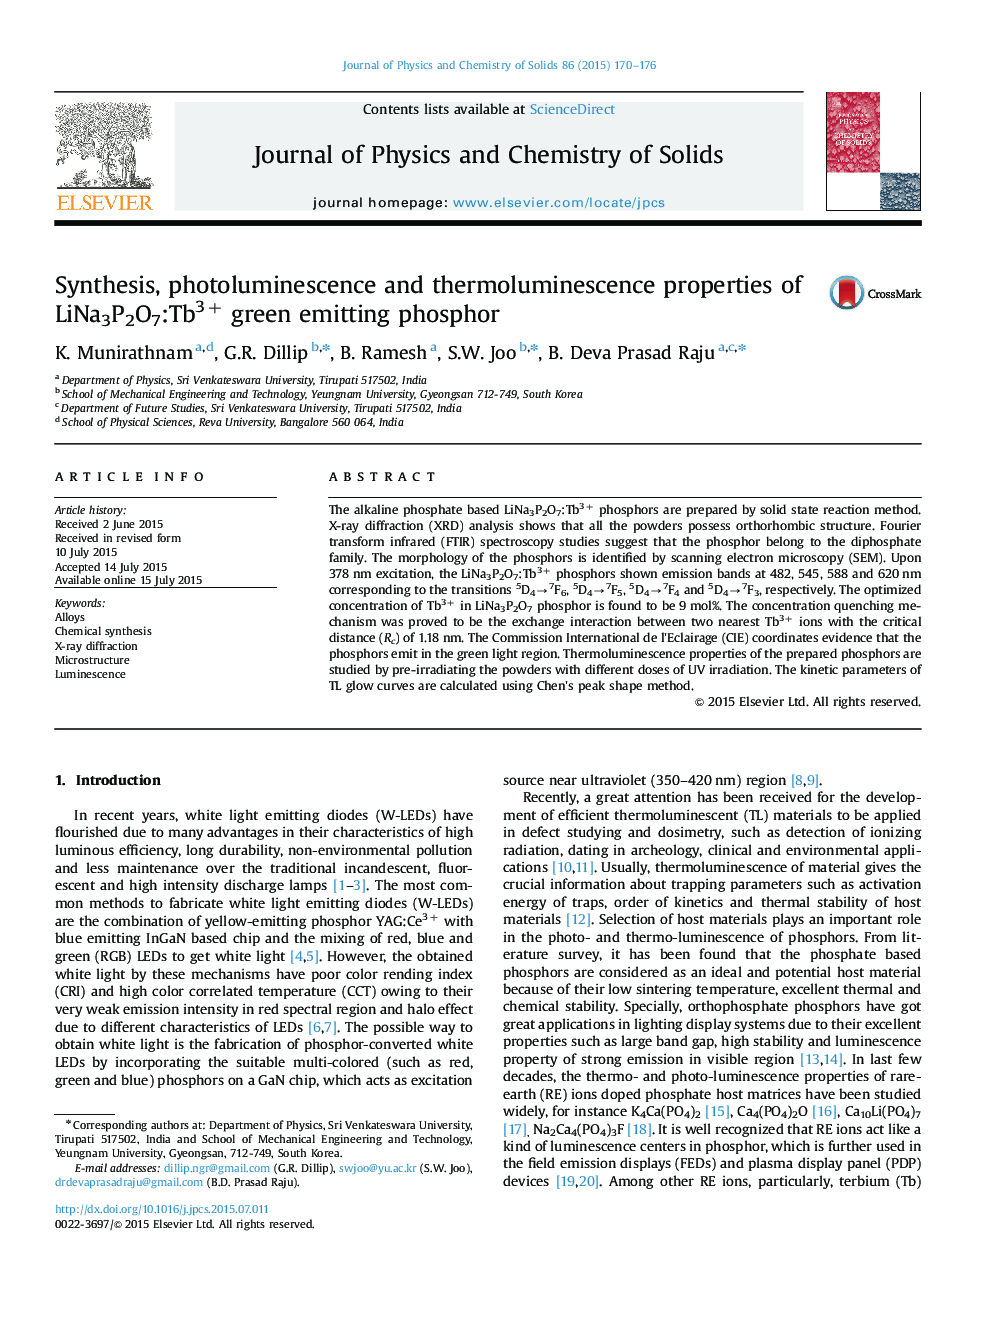 Synthesis, photoluminescence and thermoluminescence properties of LiNa3P2O7:Tb3+ green emitting phosphor